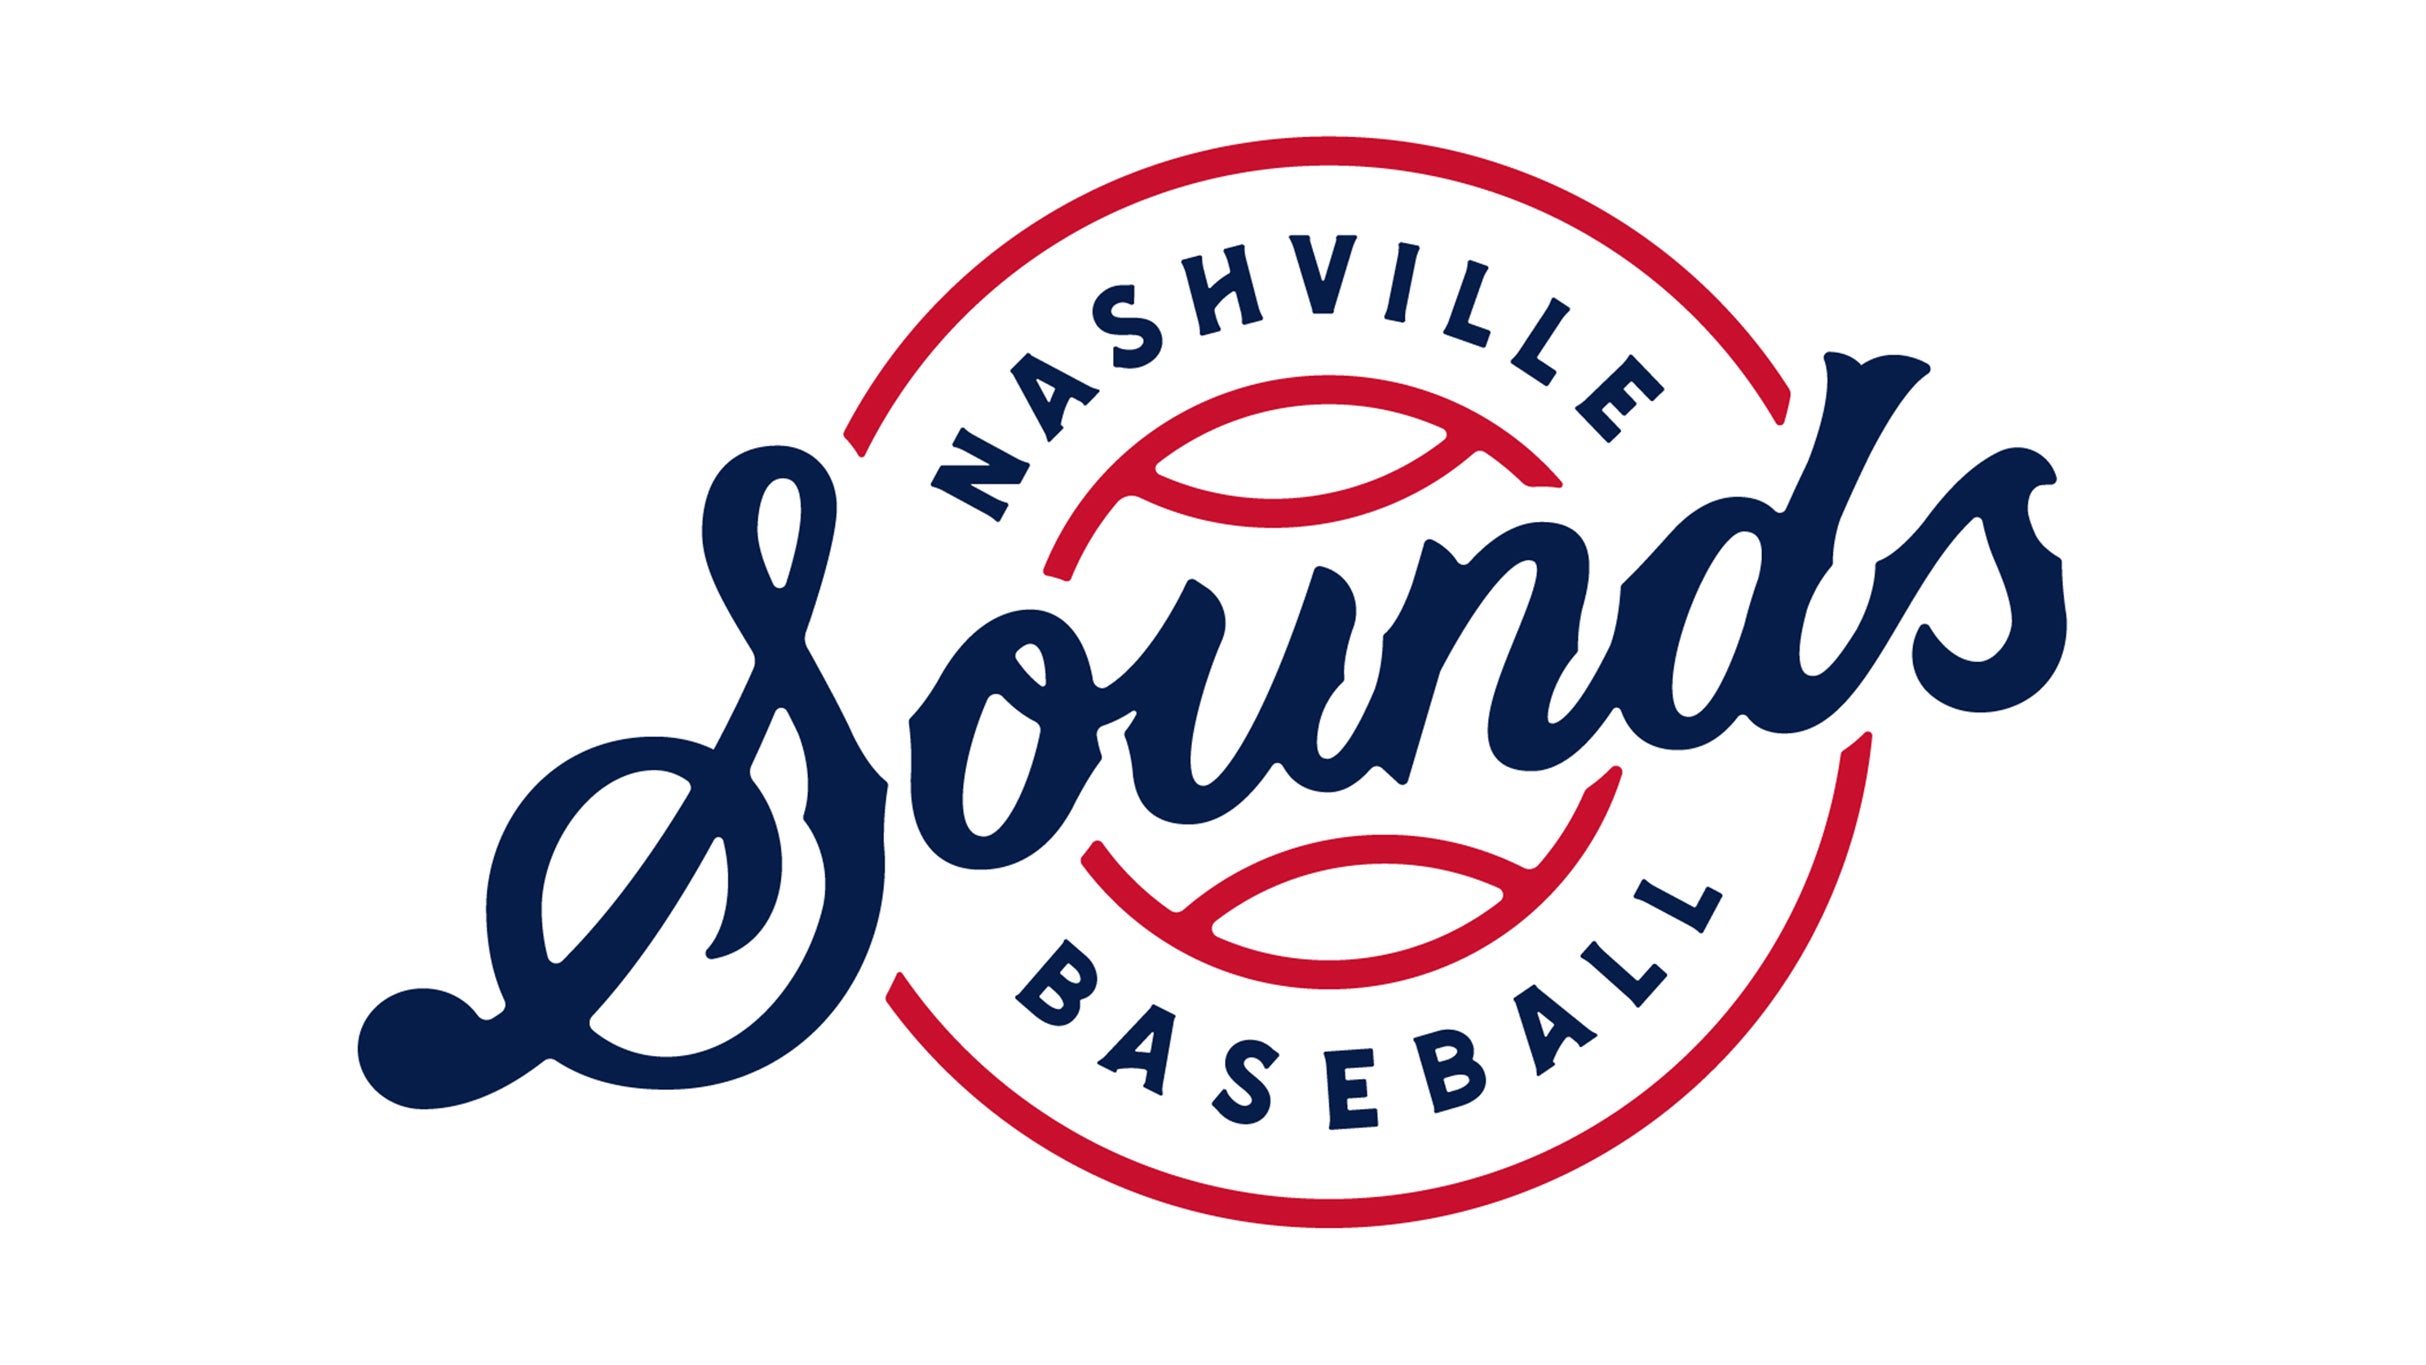 Nashville Sounds vs. Memphis Redbirds at First Horizon Park